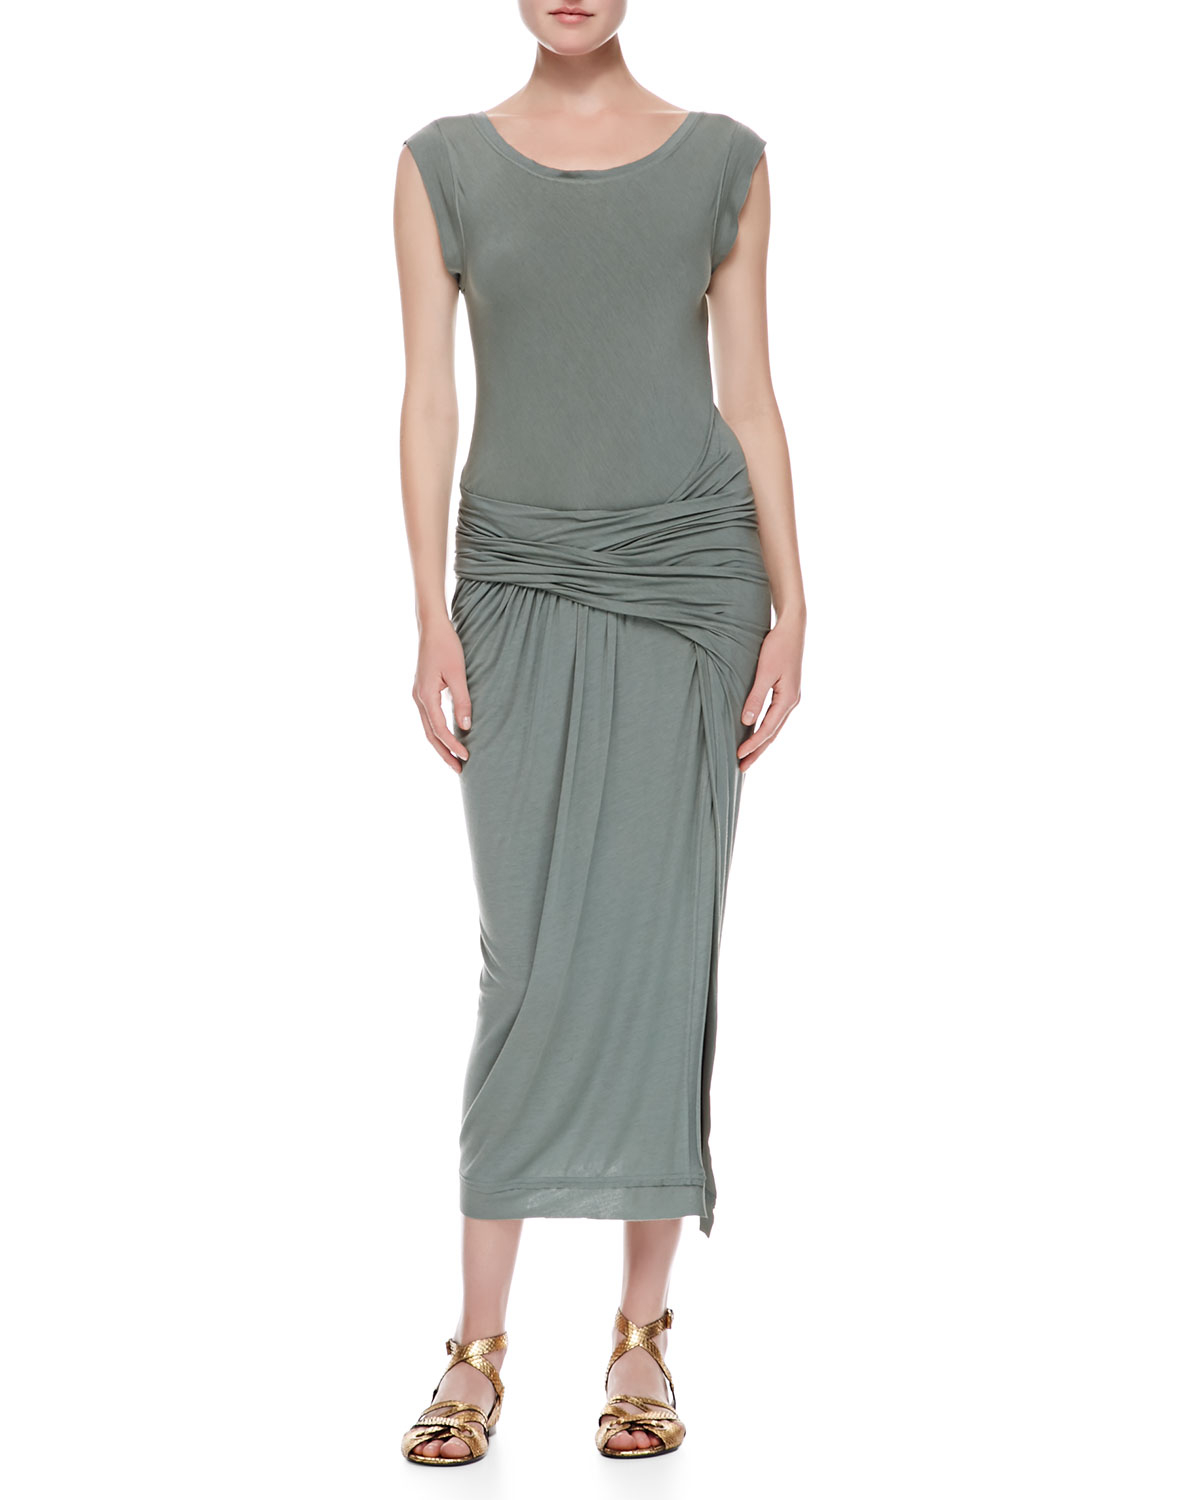 Lyst - Donna karan Cap Sleeve Draped T-shirt Dress in Gray